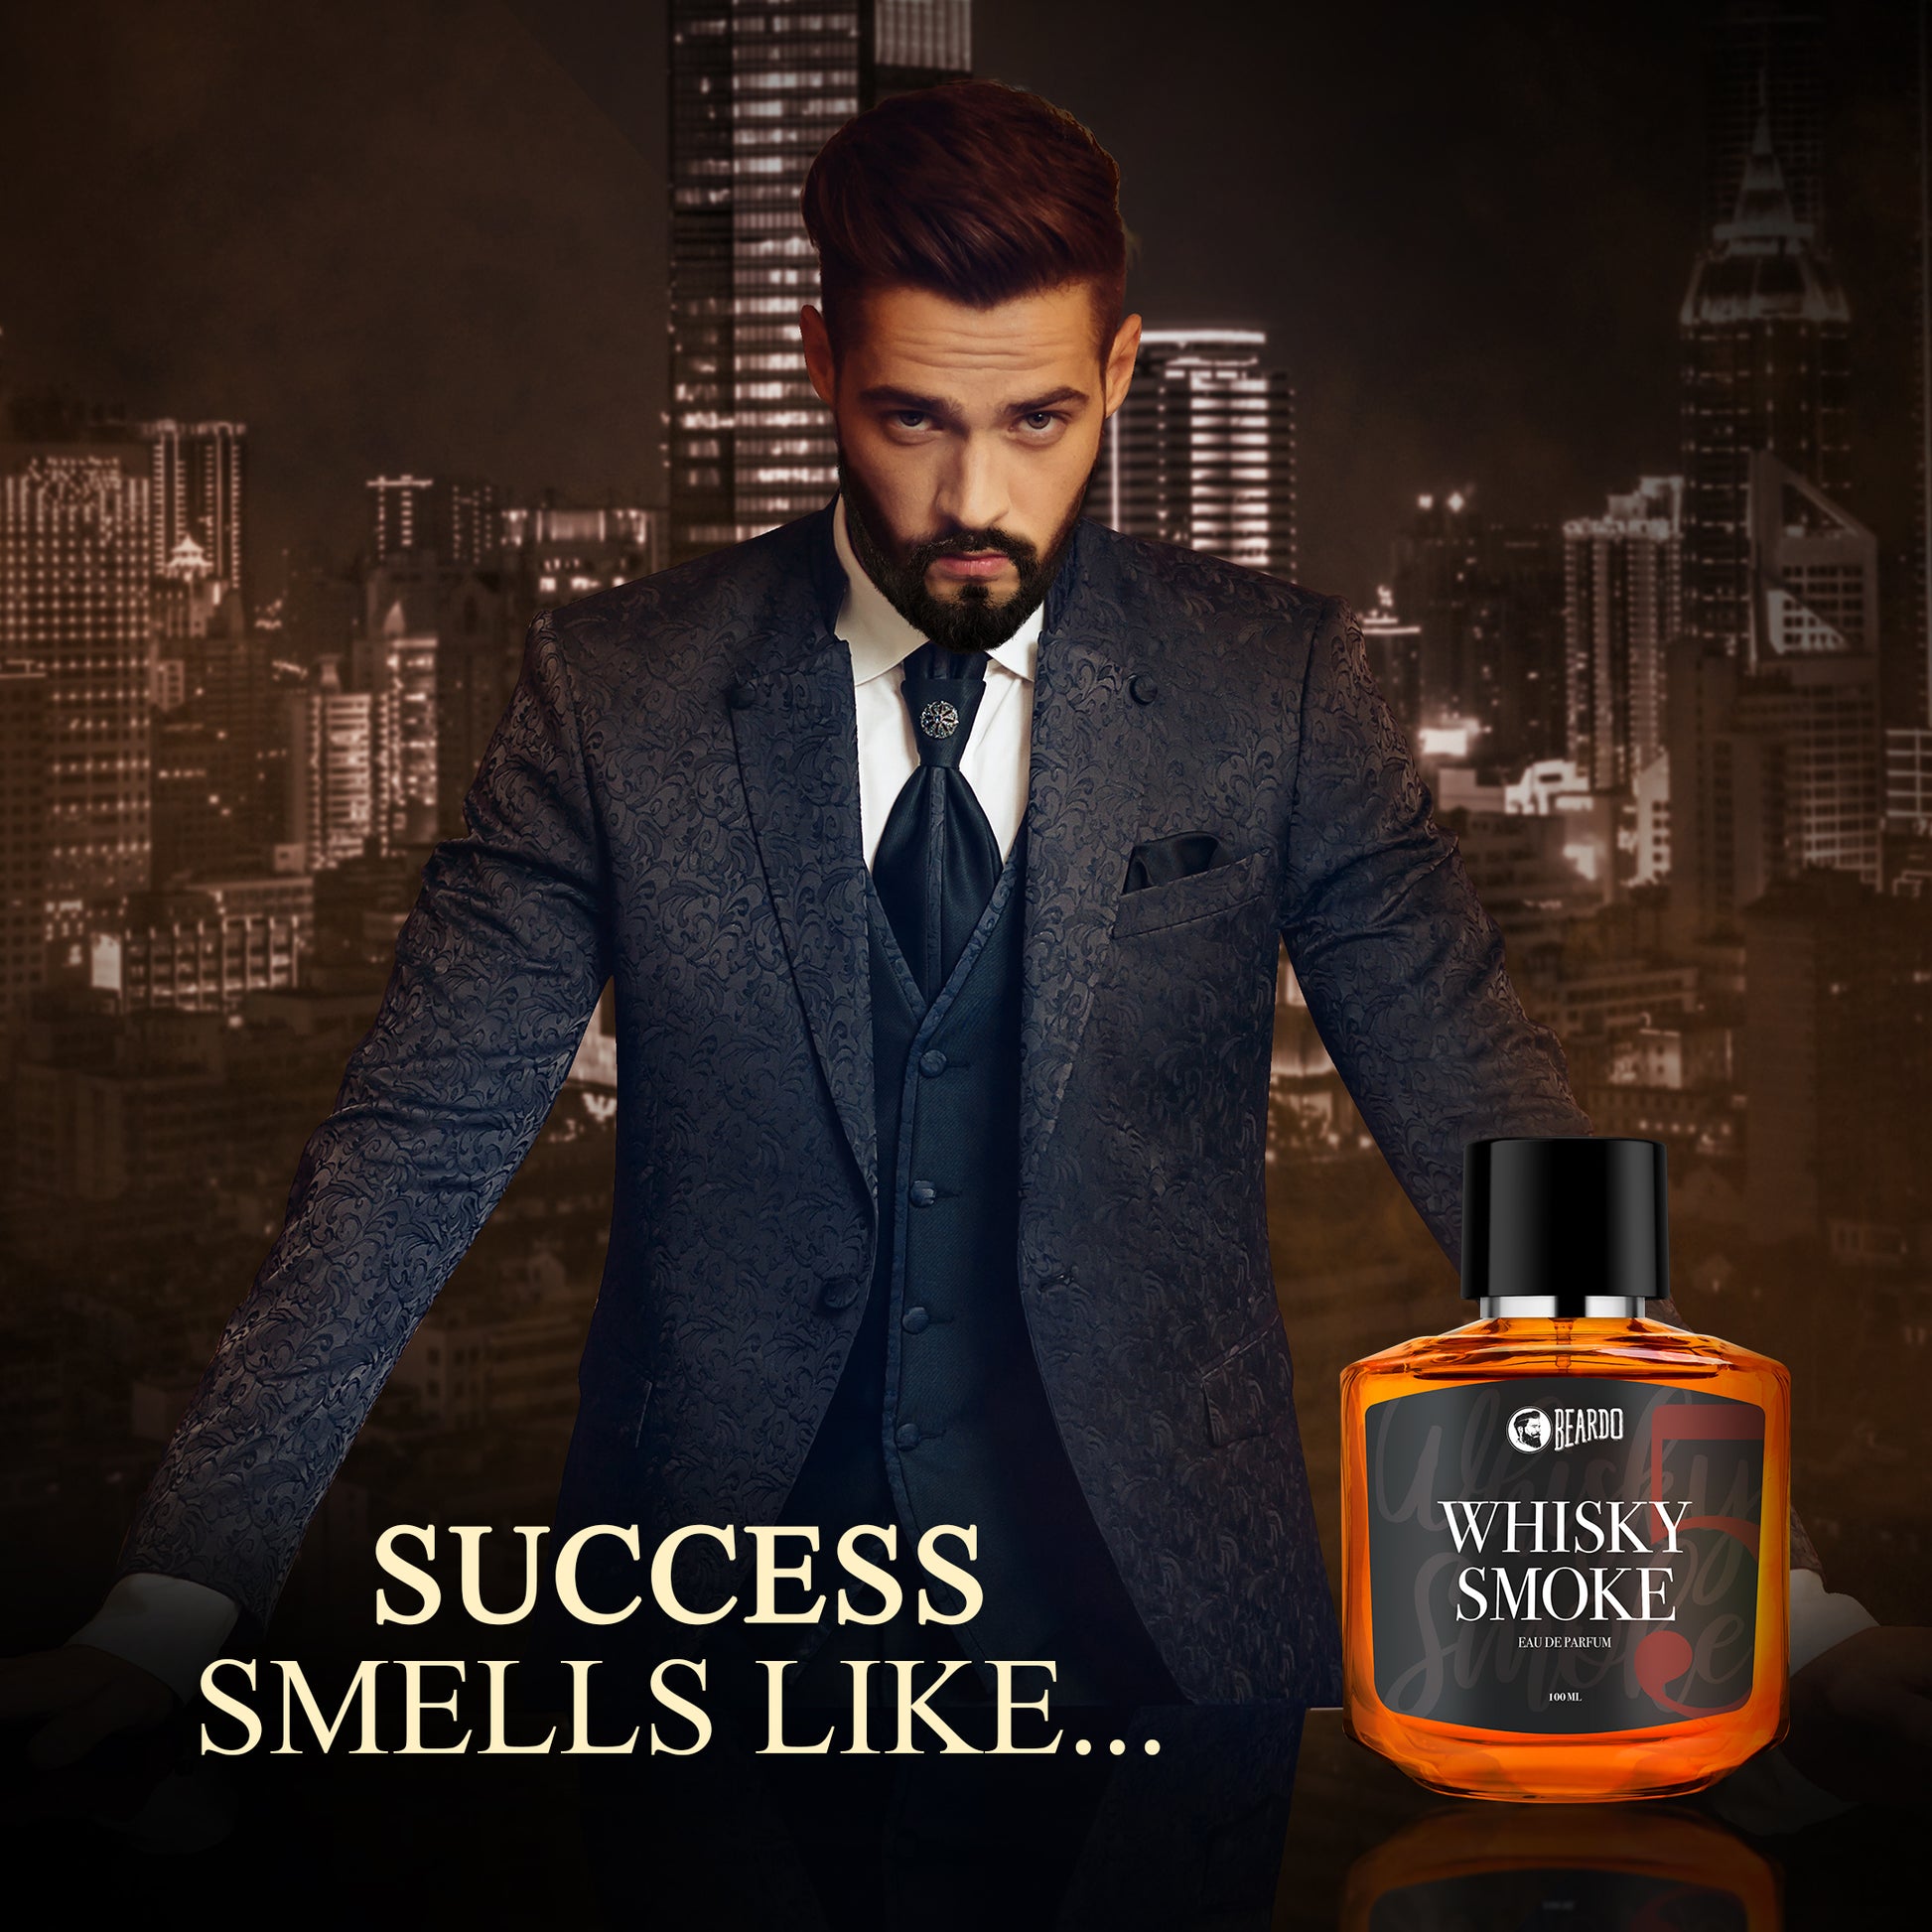 Beardo Whisky Smoke Perfume EDP – Beardo India